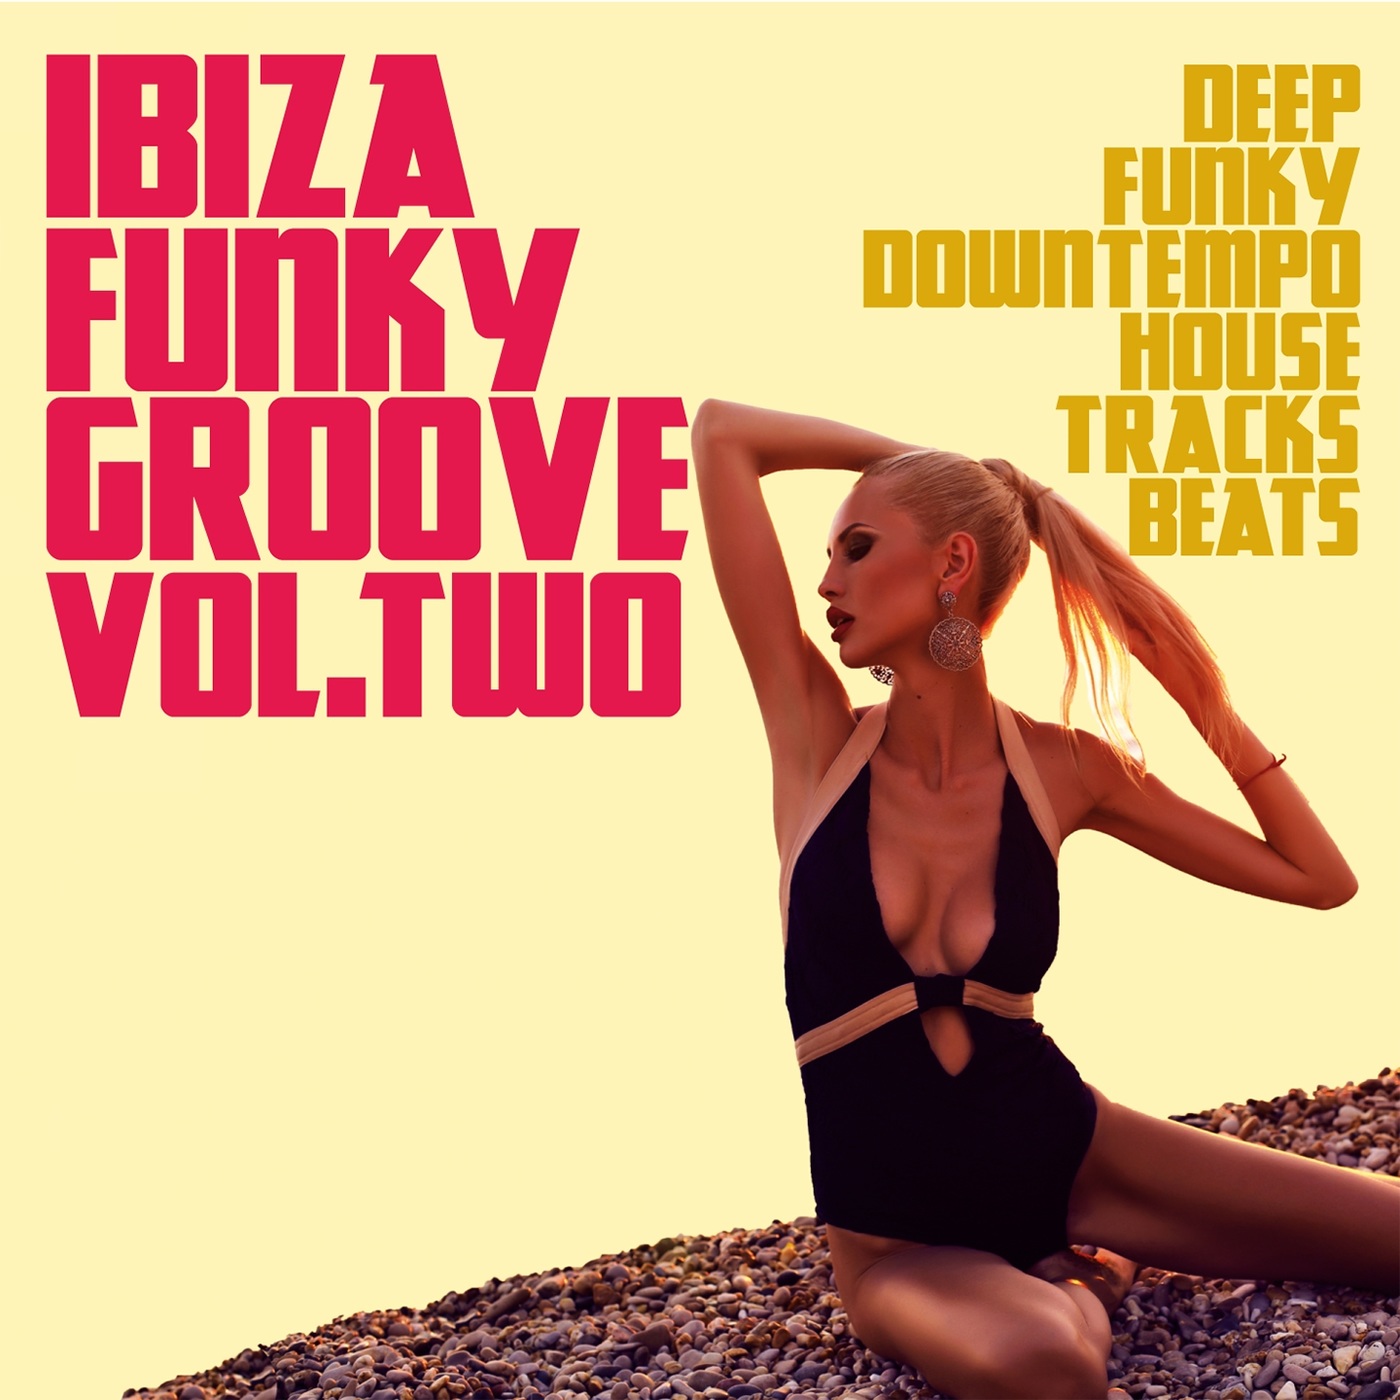 VA - Ibiza Funky Groove Volume Two (Deep Funky Downtempo House Tracks Beats) / Irma records